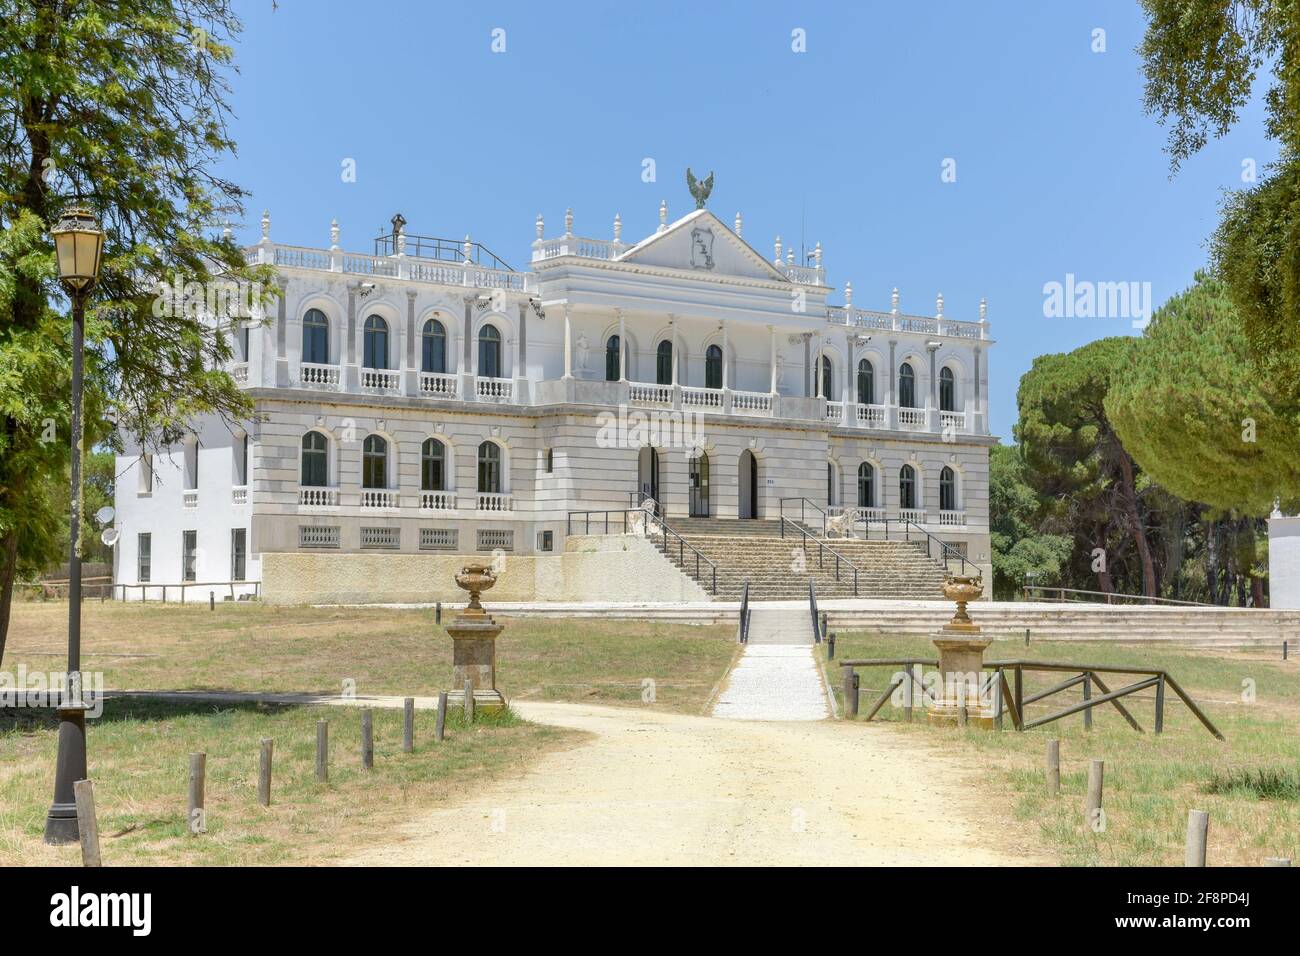 Facade of Acebron Palace in Donana National Park, Spain Stock Photo